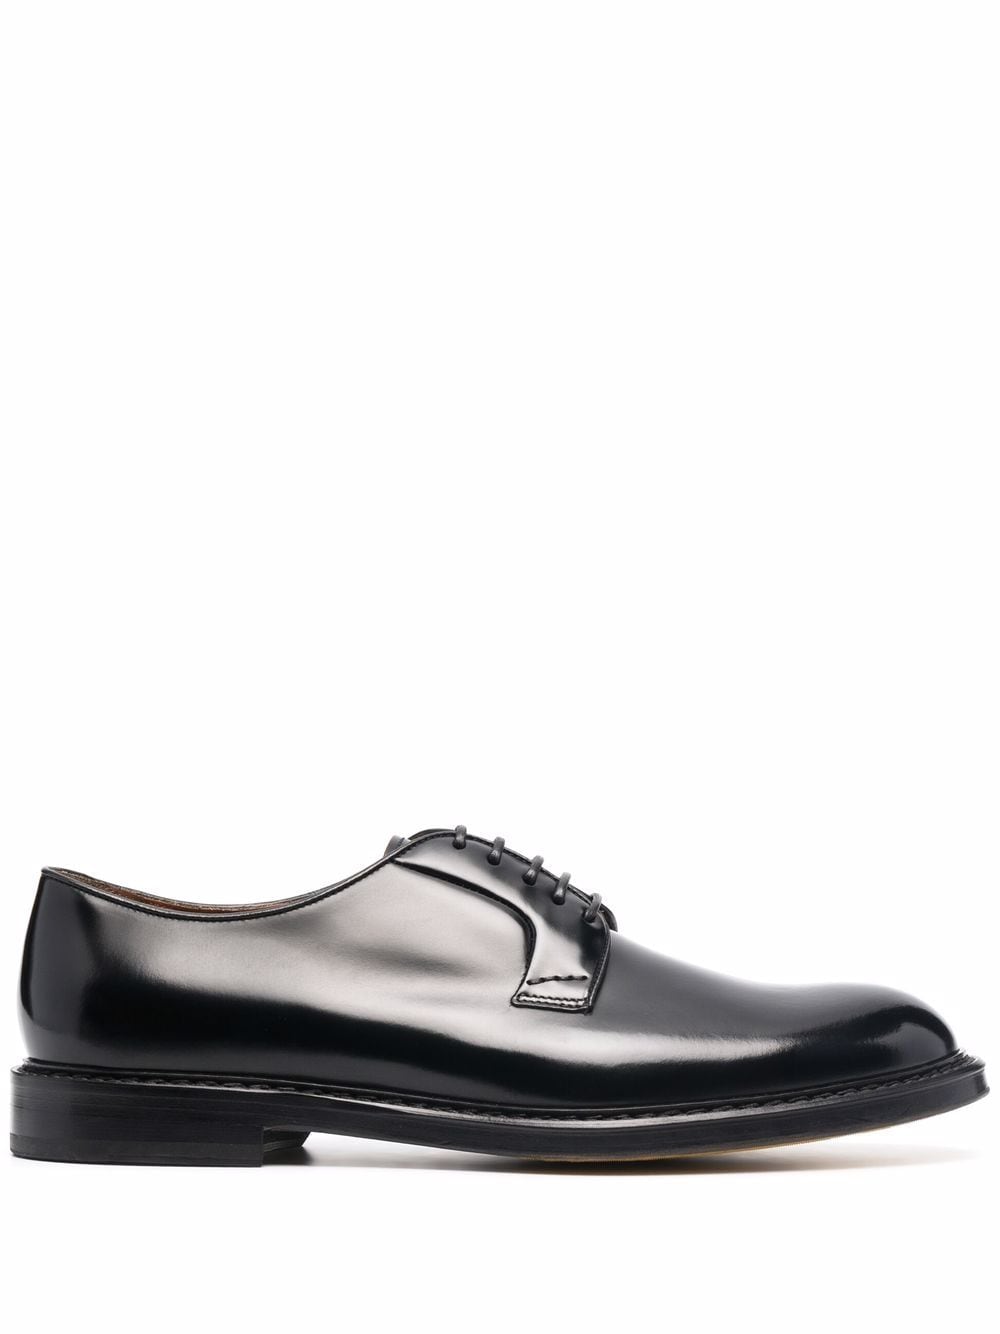 Doucal's leather derby shoes - Black von Doucal's